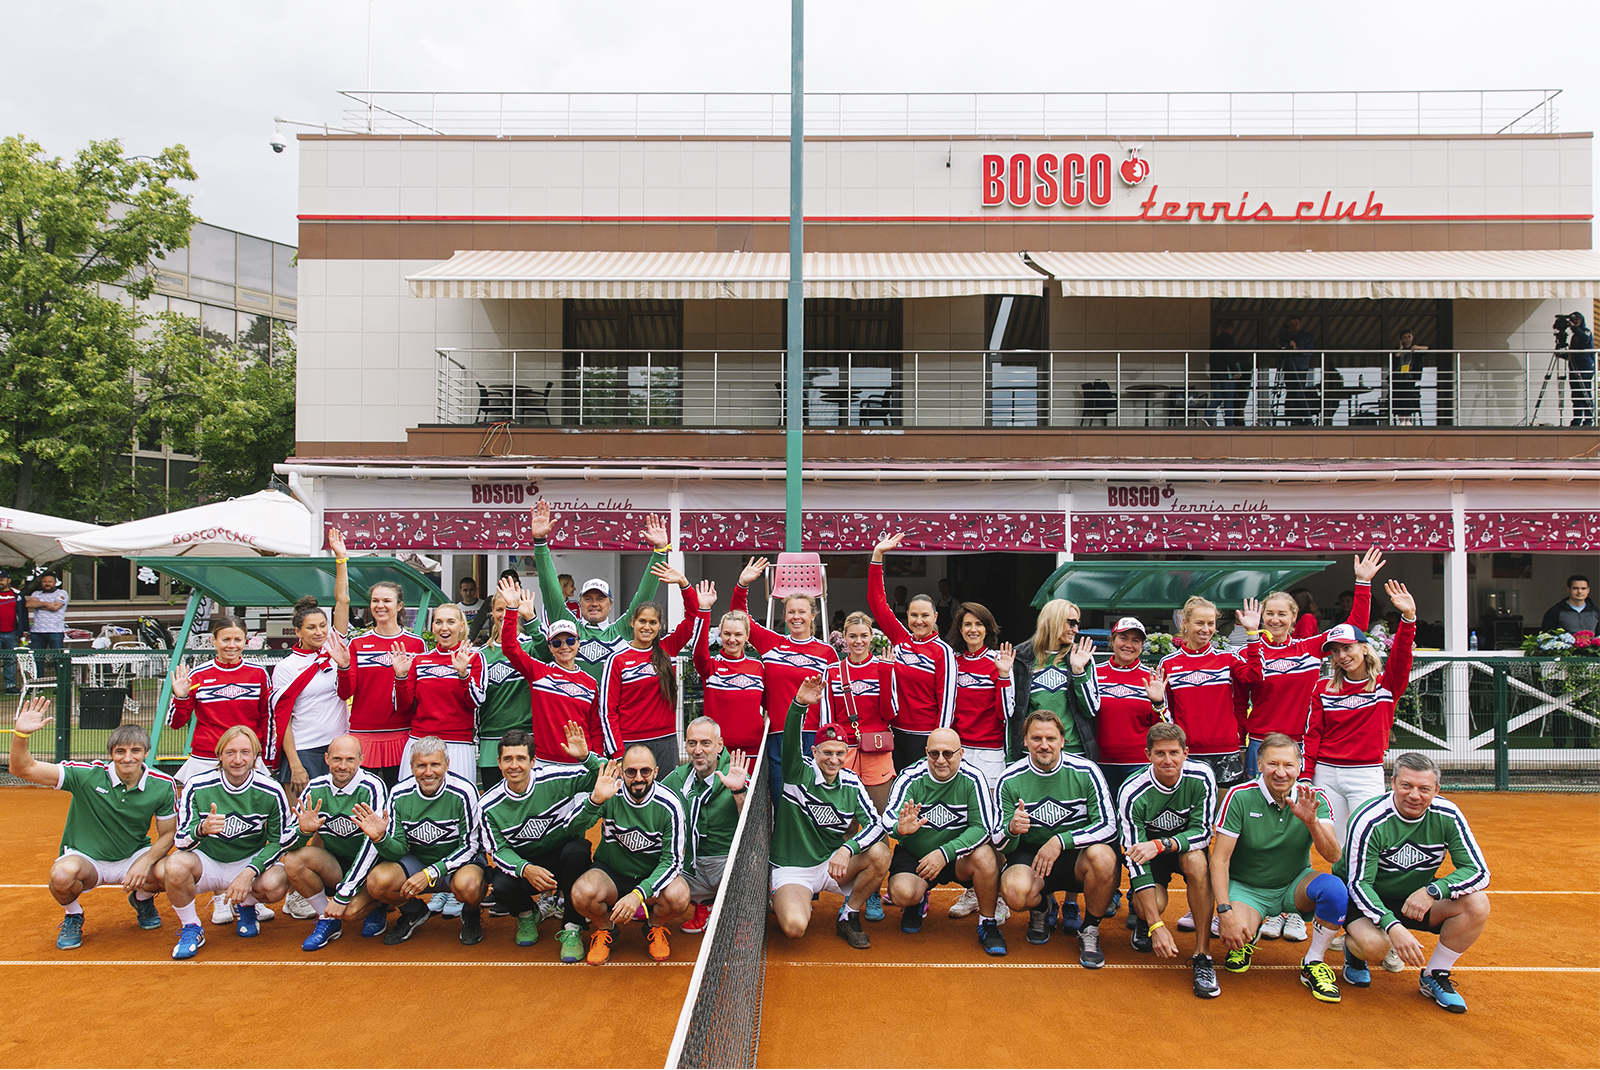 Bosco Friends Tennis Club